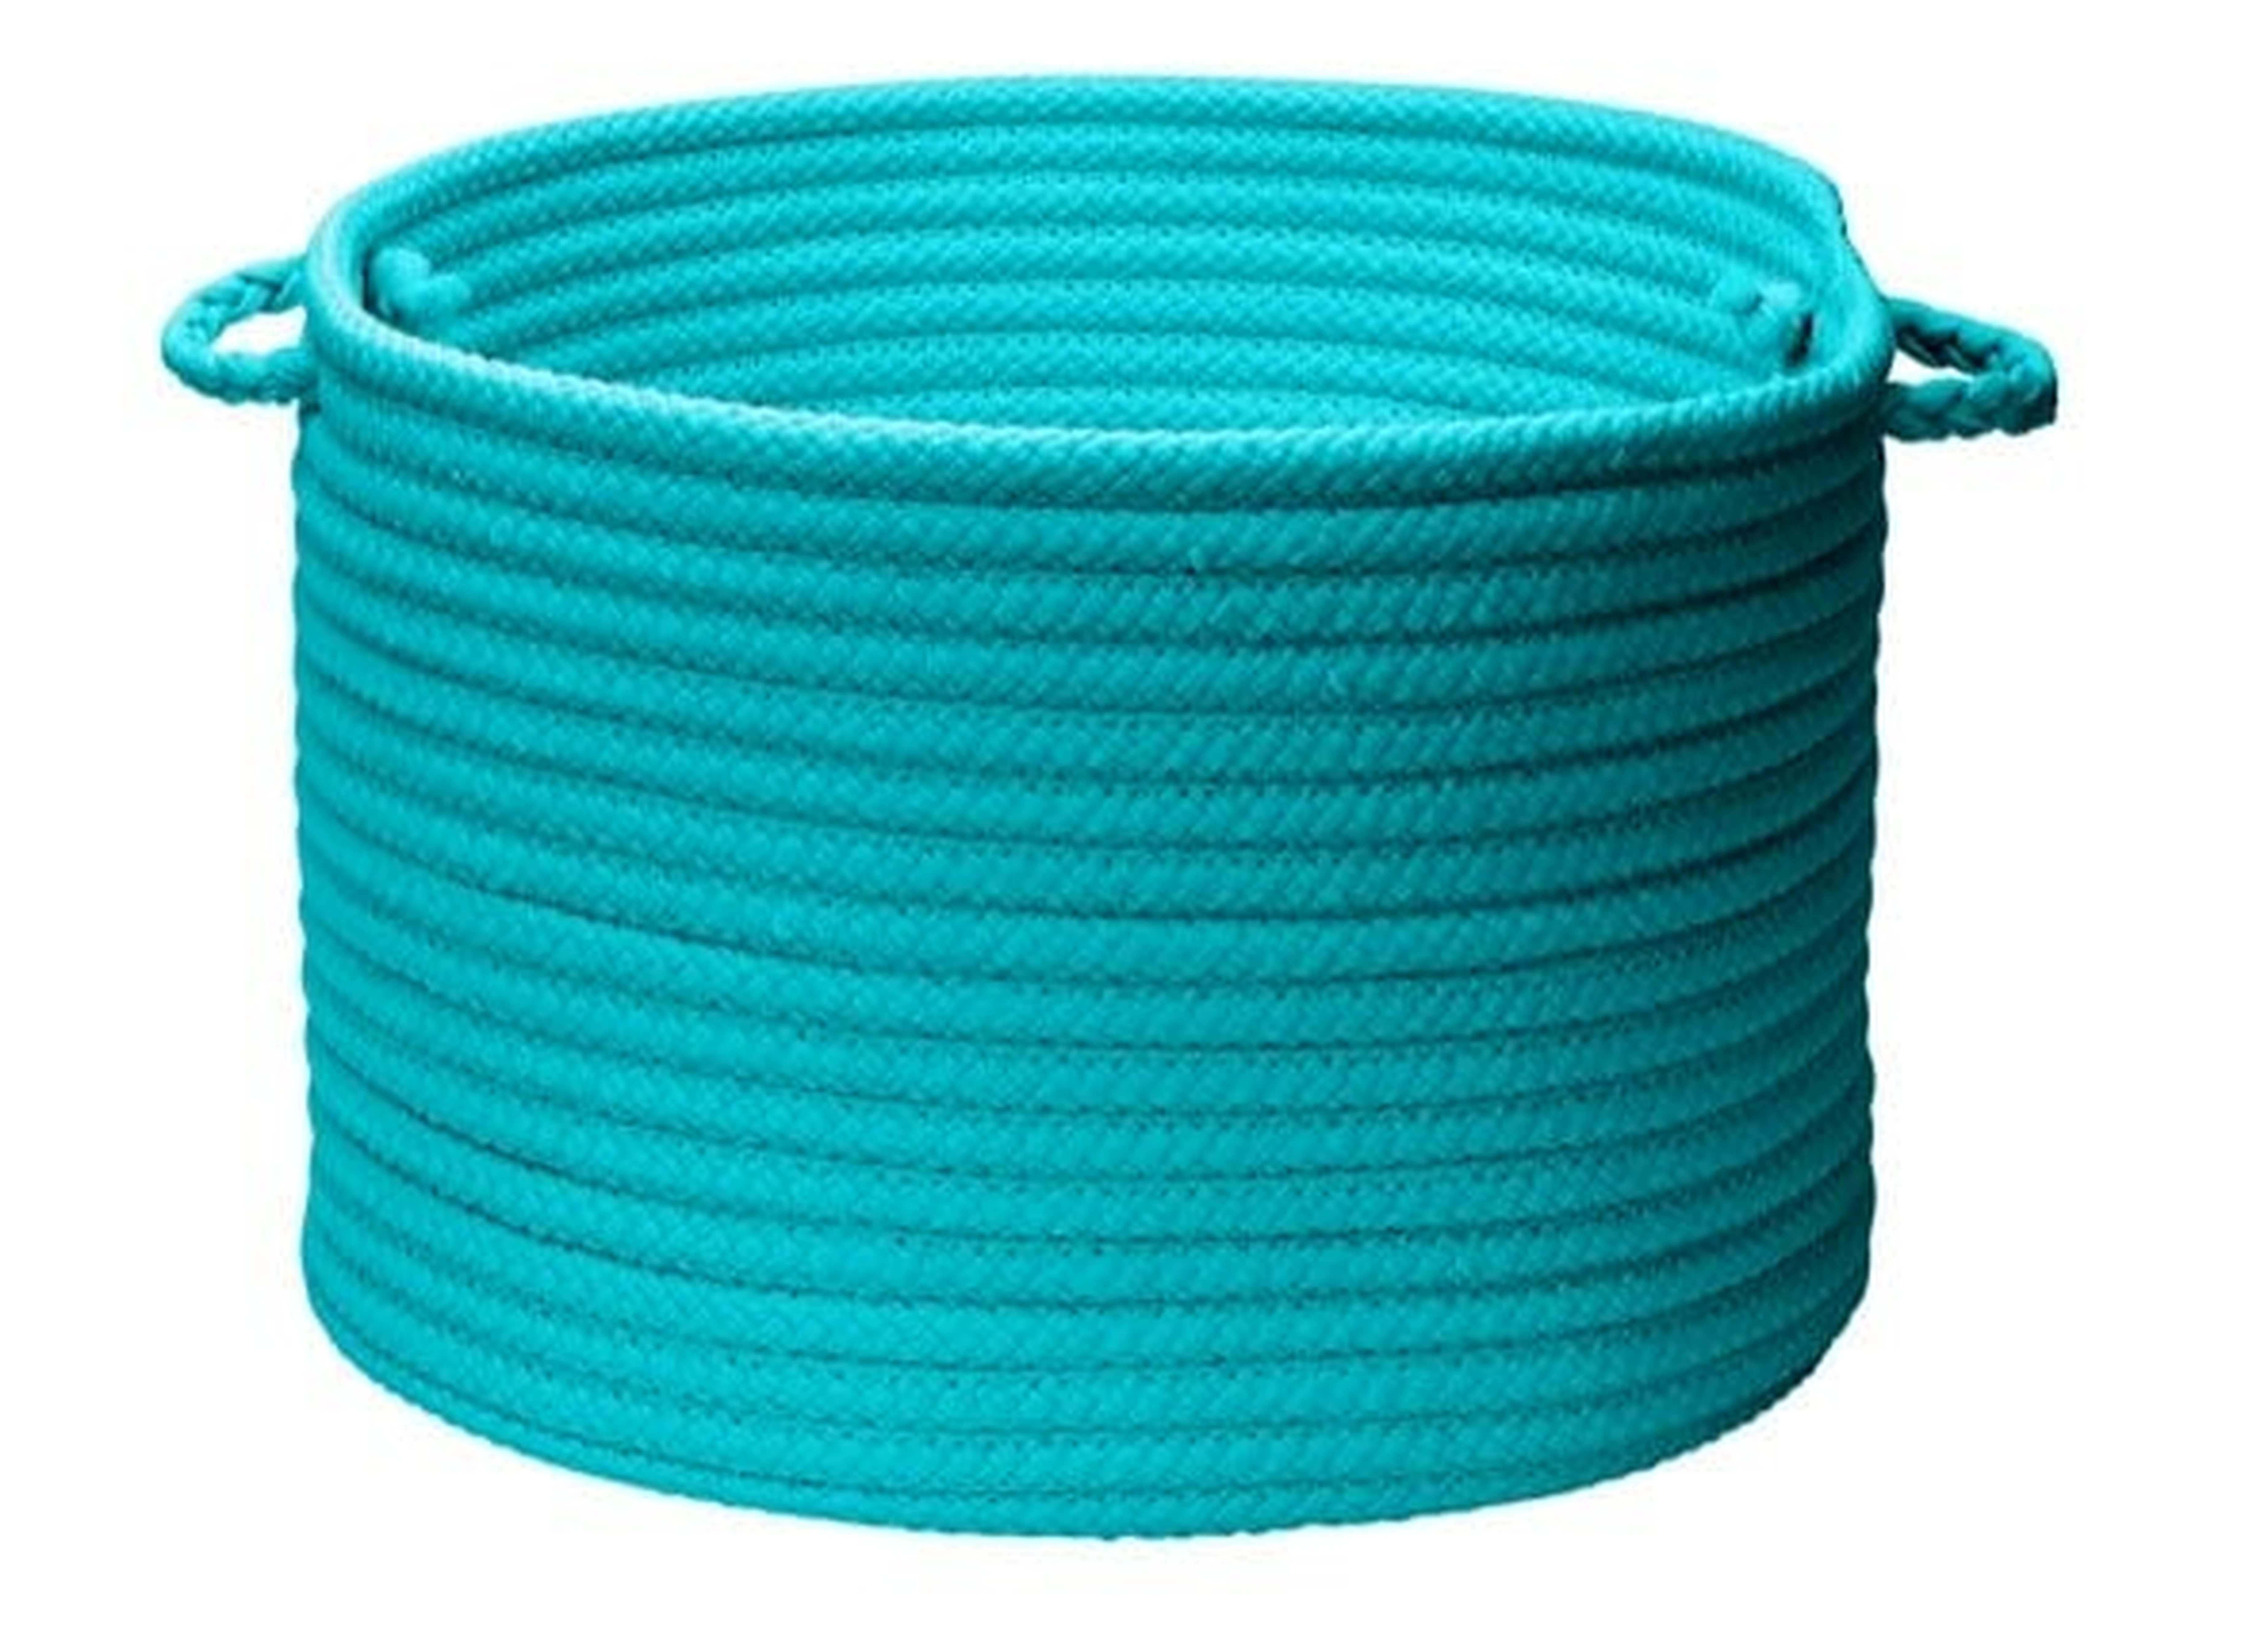 Utility Fabric Basket Turquoise - Wayfair